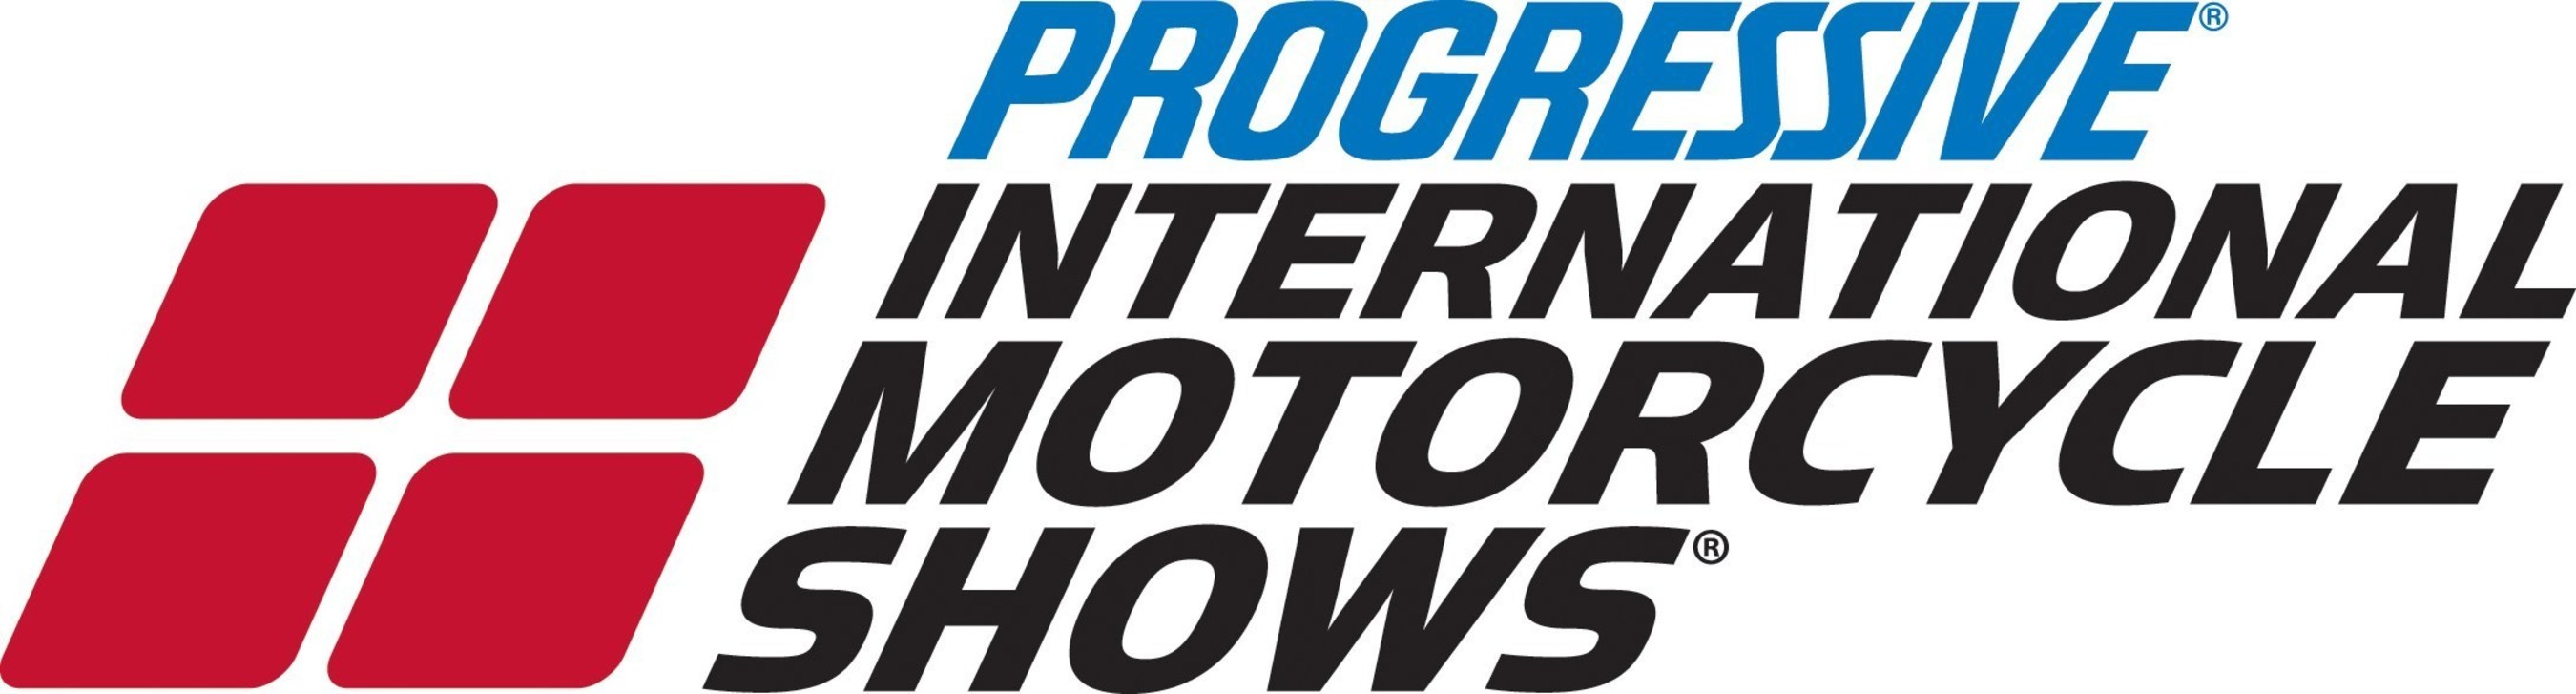 Progressive(R) International Motorcycle Shows(R) (IMS)